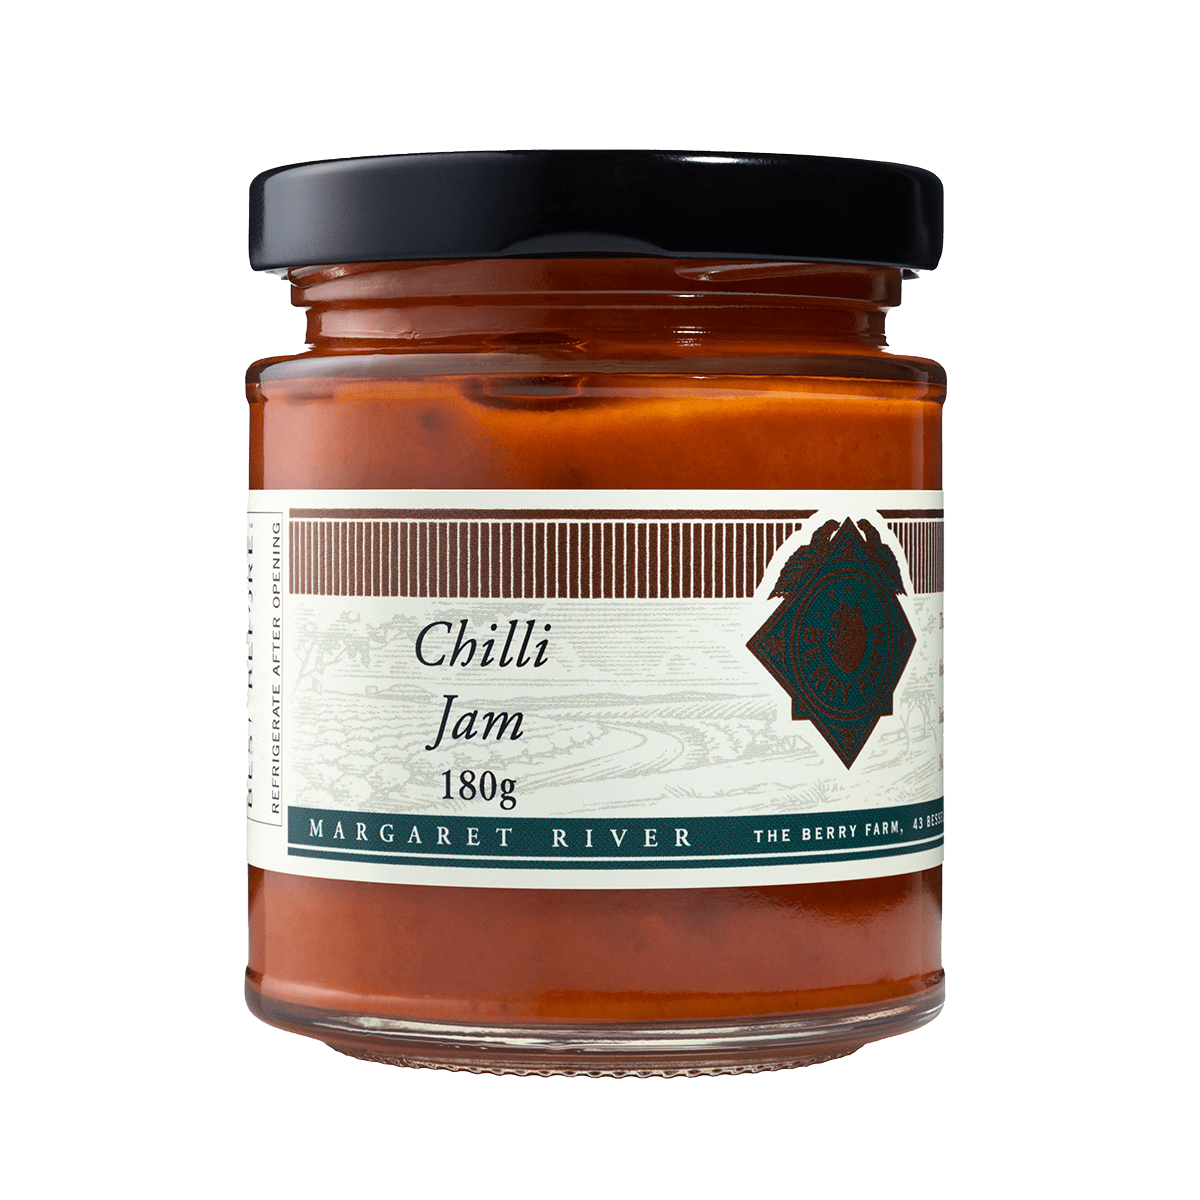 A jar of Chilli Jam